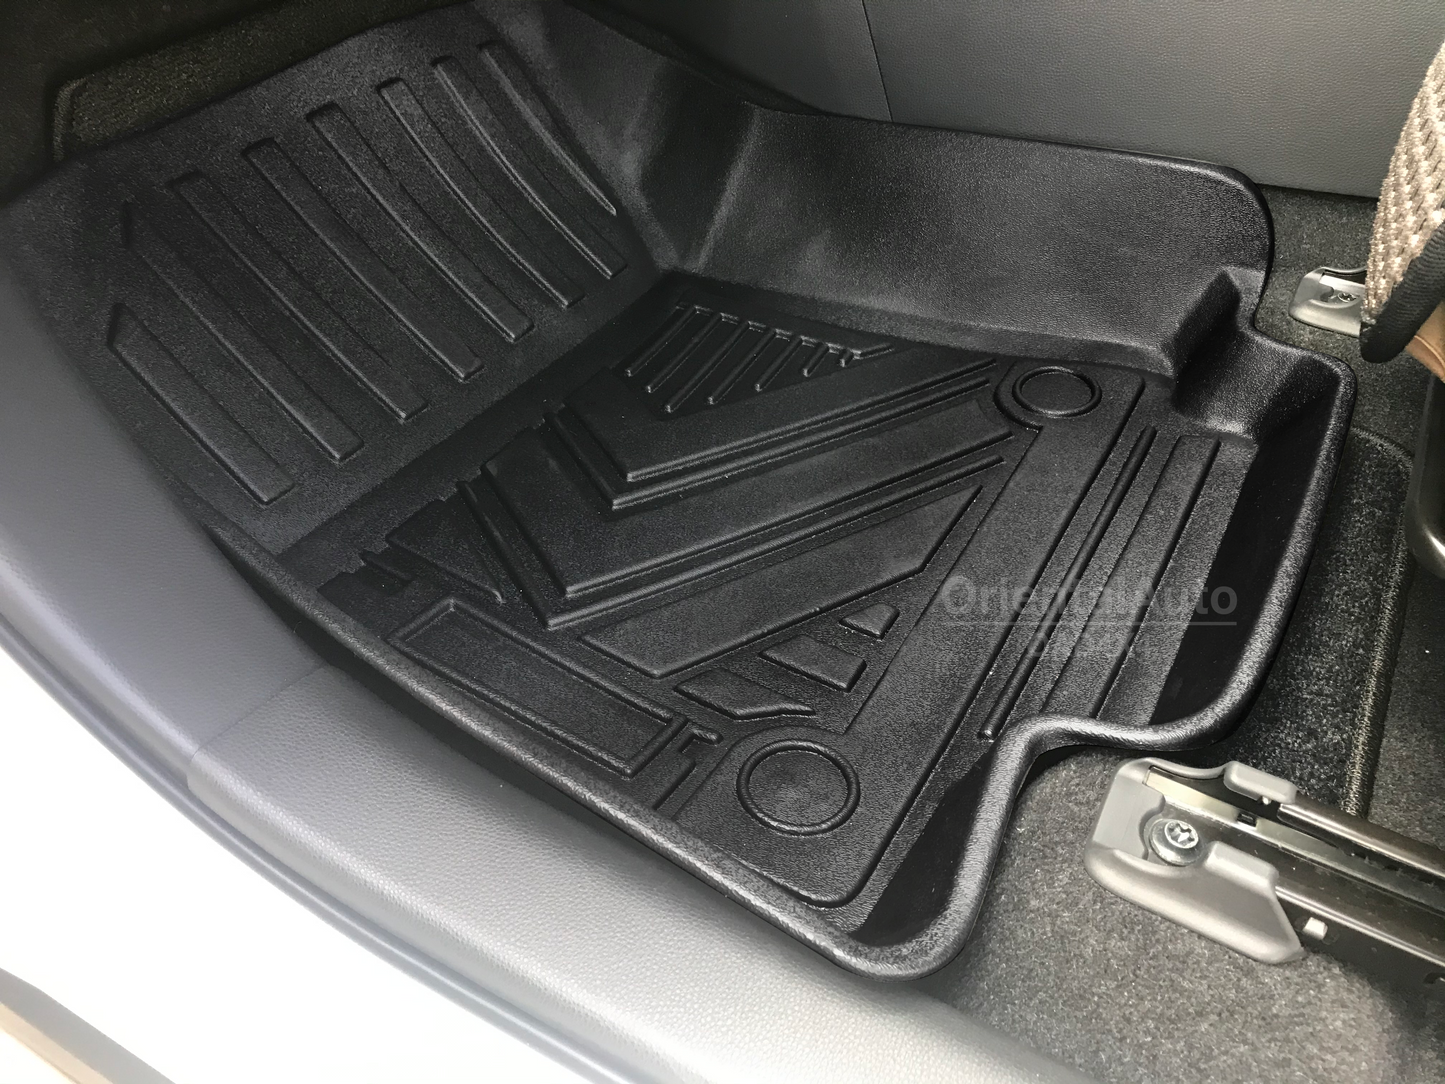 Premium Custom 3D Floor Mats & Cargo Mat for Toyota RAV4 2019-Onwards Gasoline / Petrol Car Mat Liner + Boot Mat